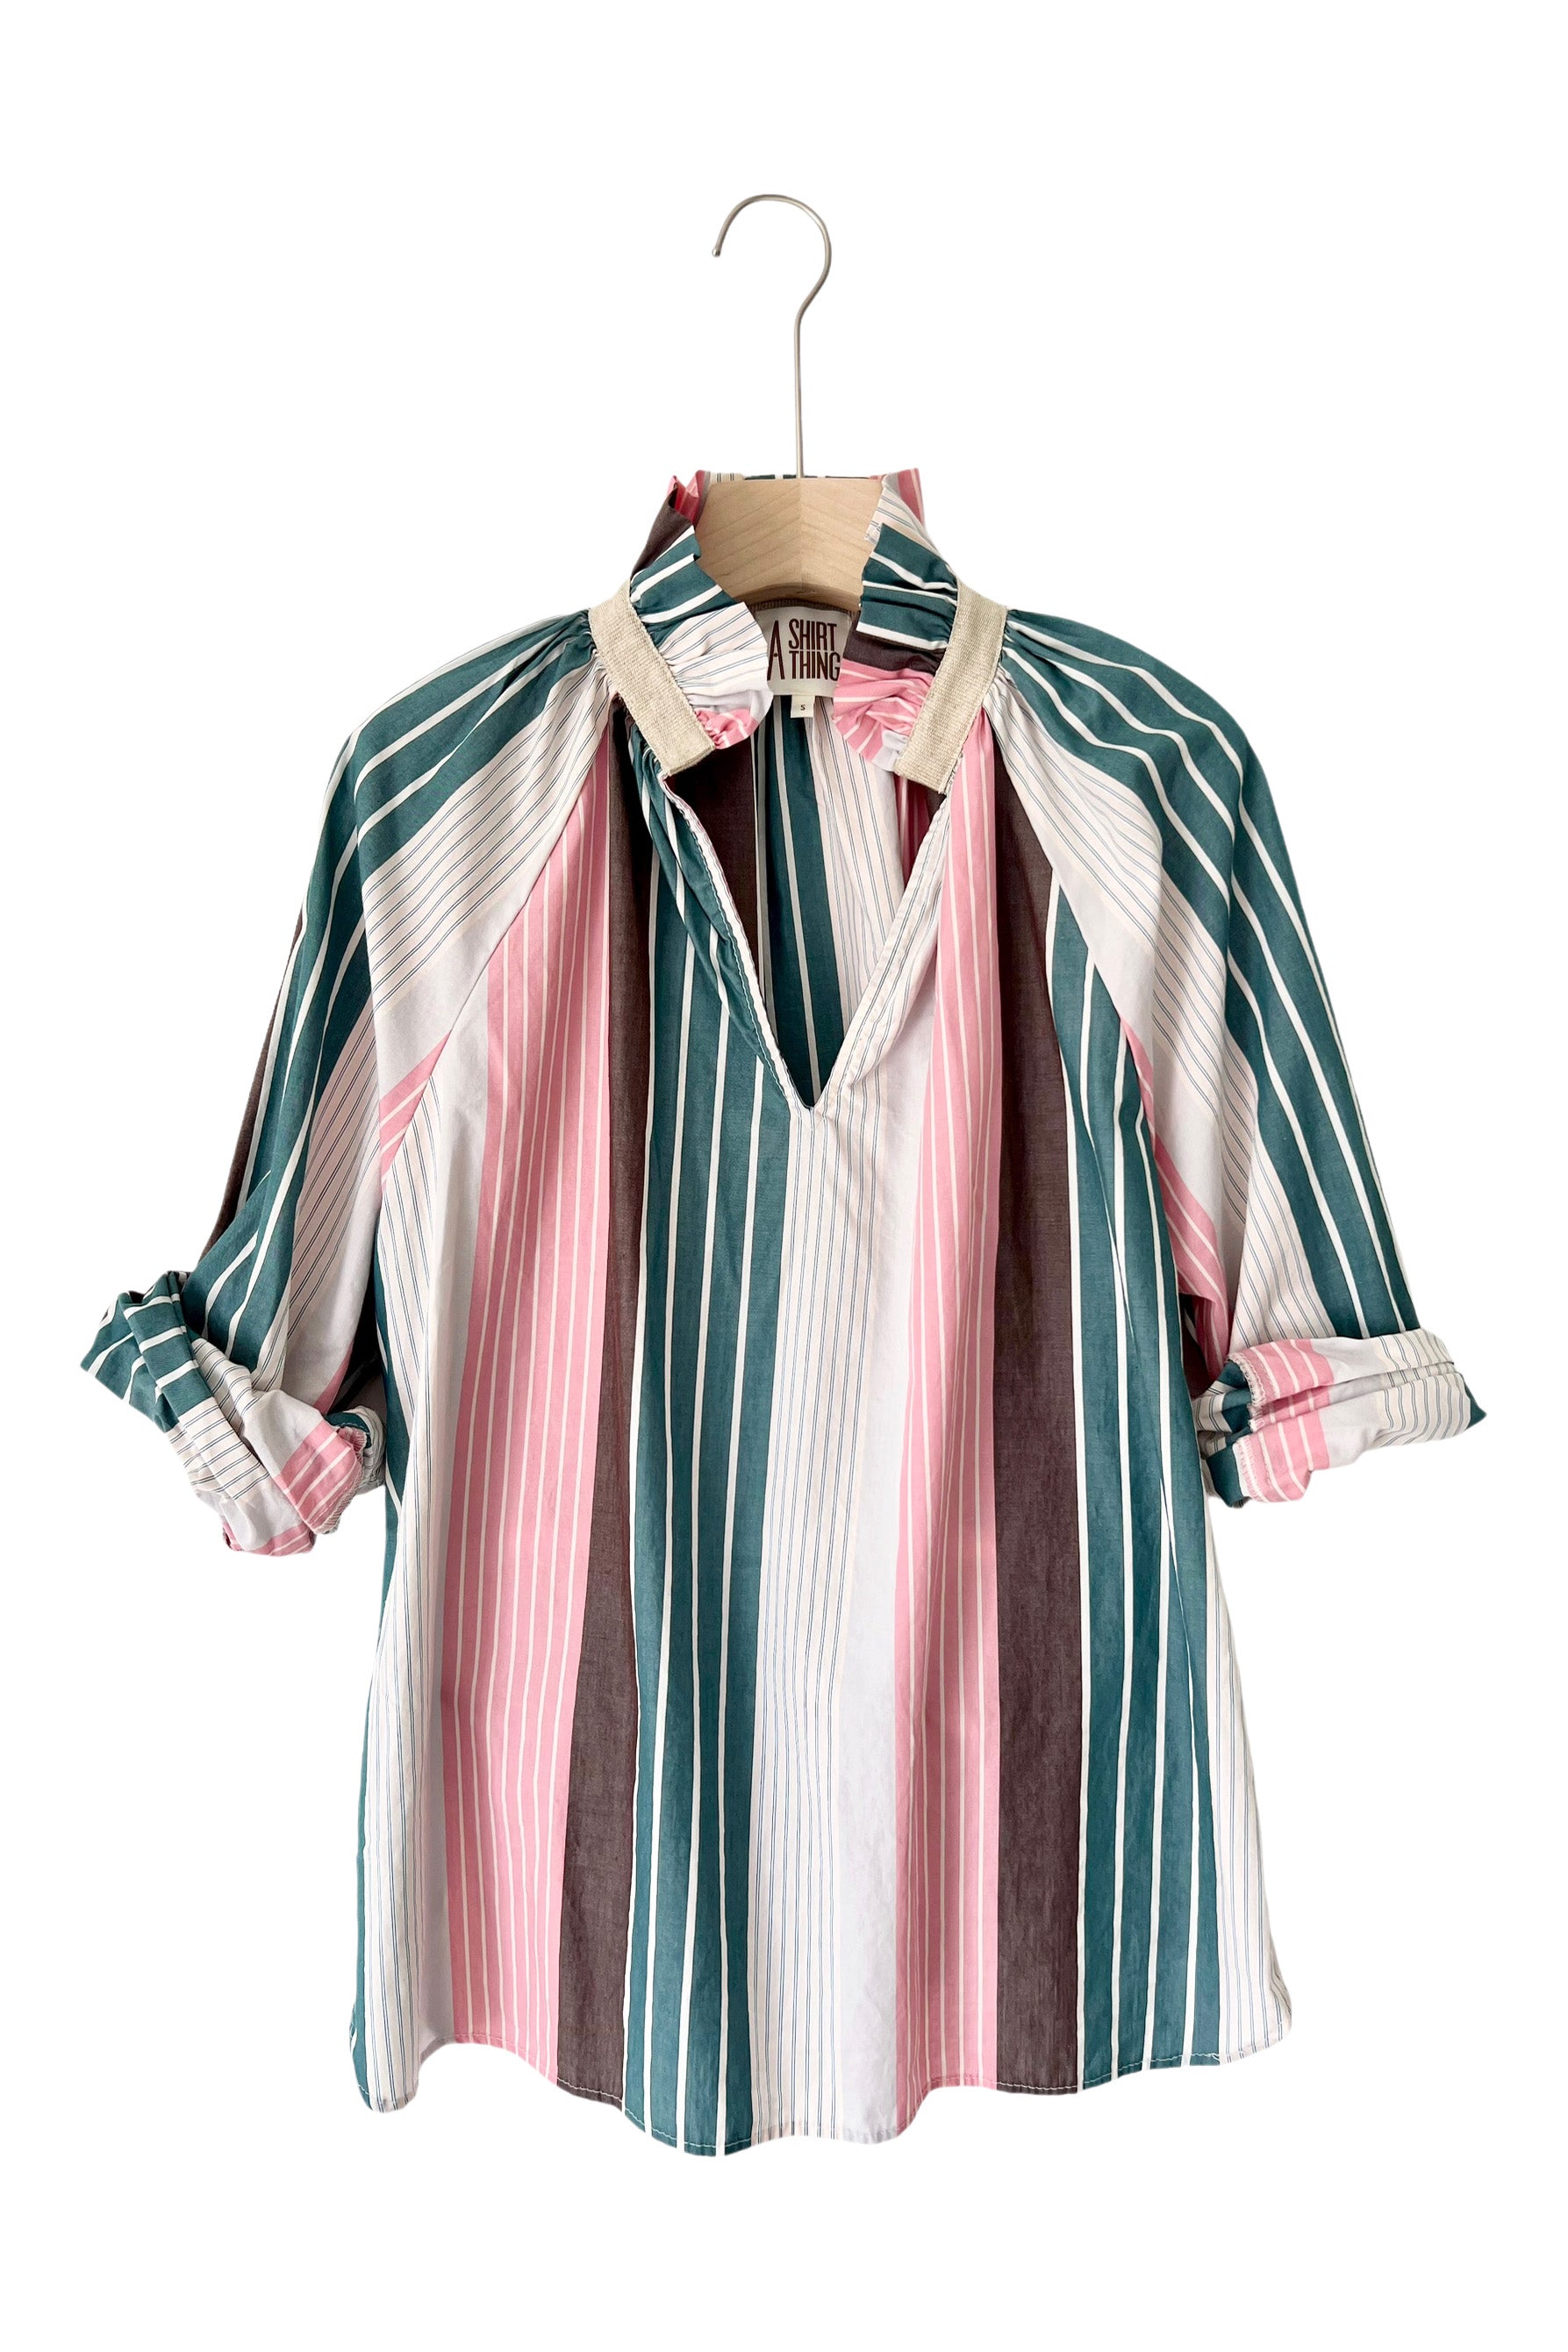 A Shirt Thing Penelope Amalfi Stripe Top in Carnation